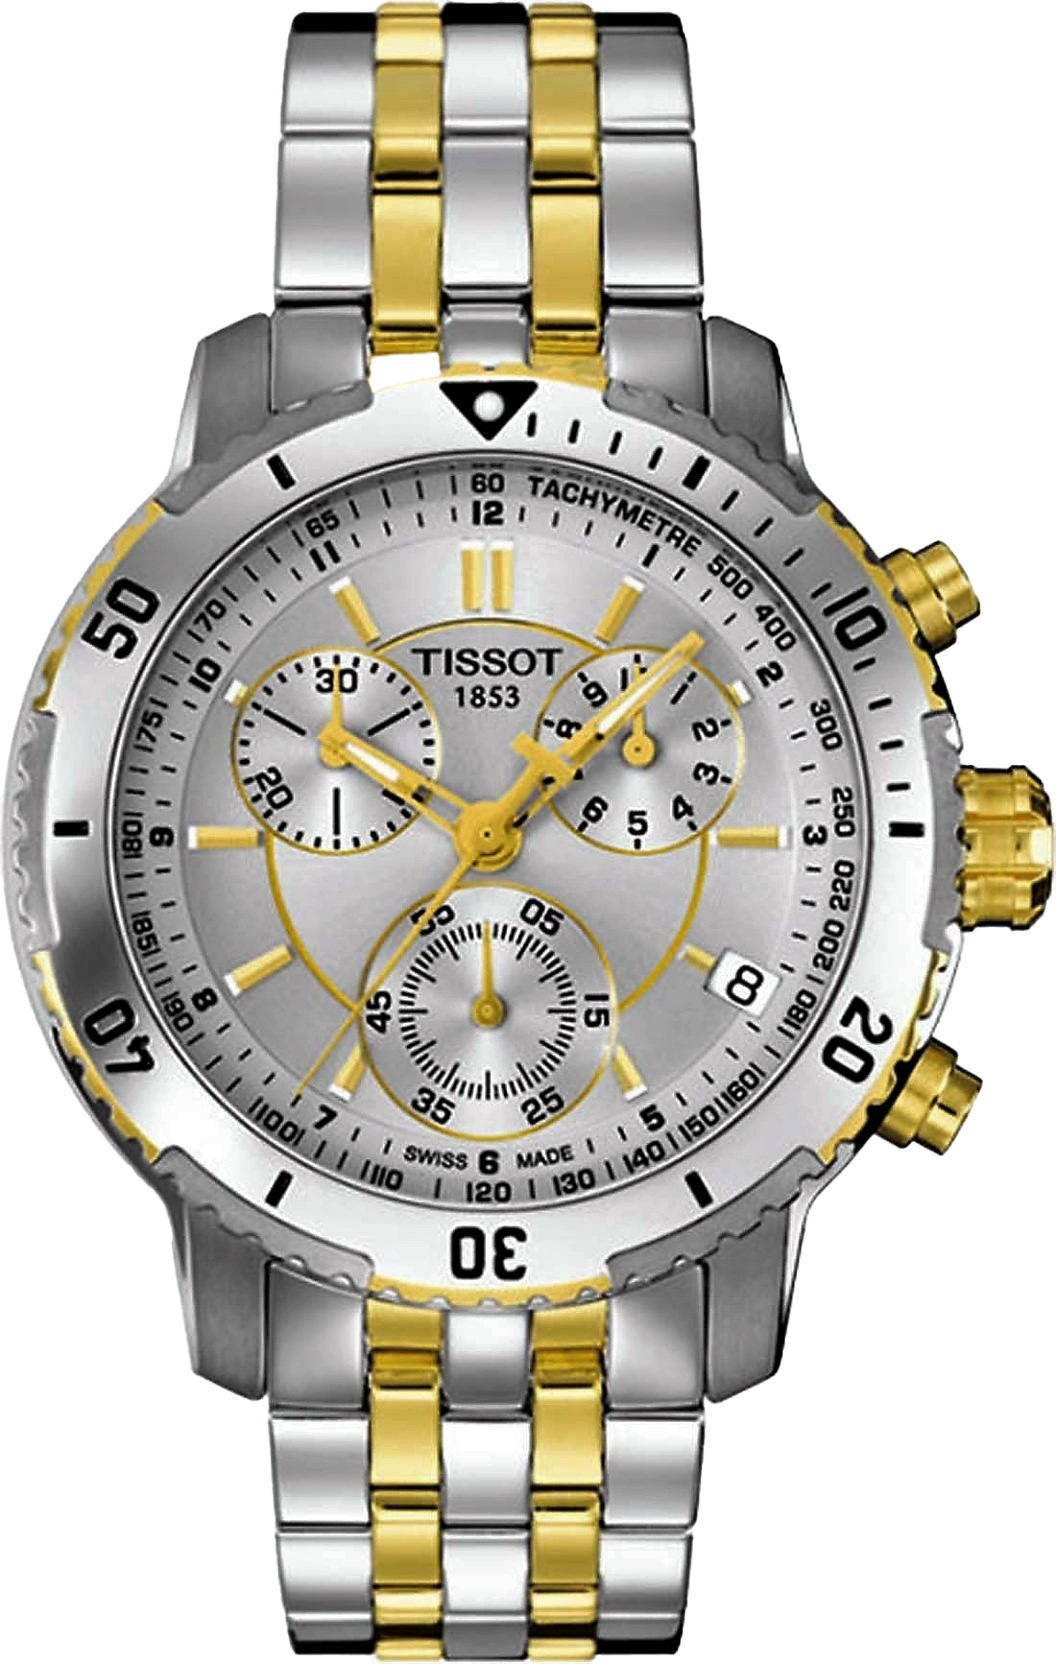 Tissot PRS 200 Chronograph-exchage-image